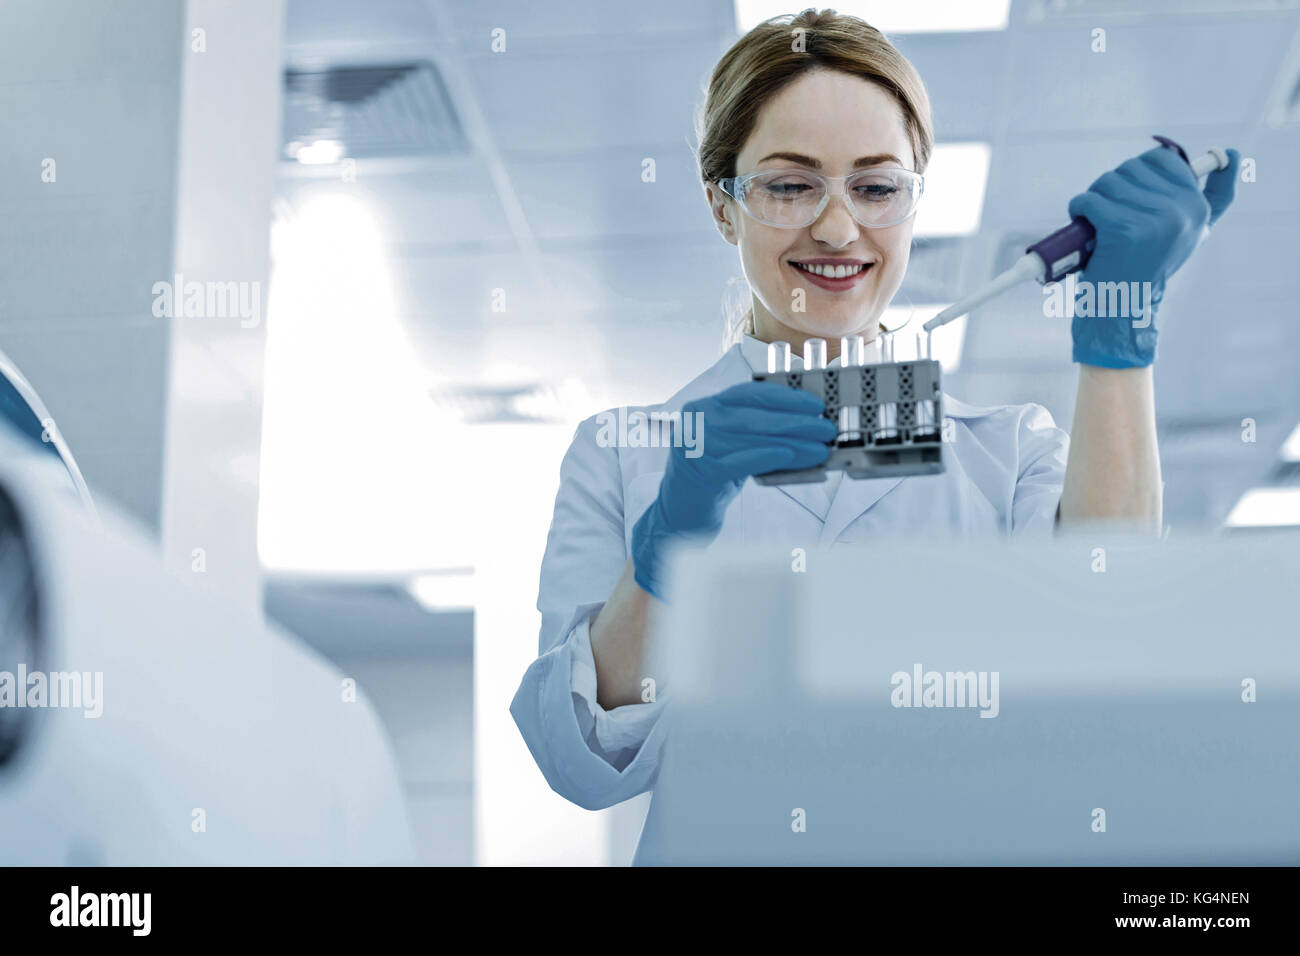 Smart professional scientist doing her job Stock Photo